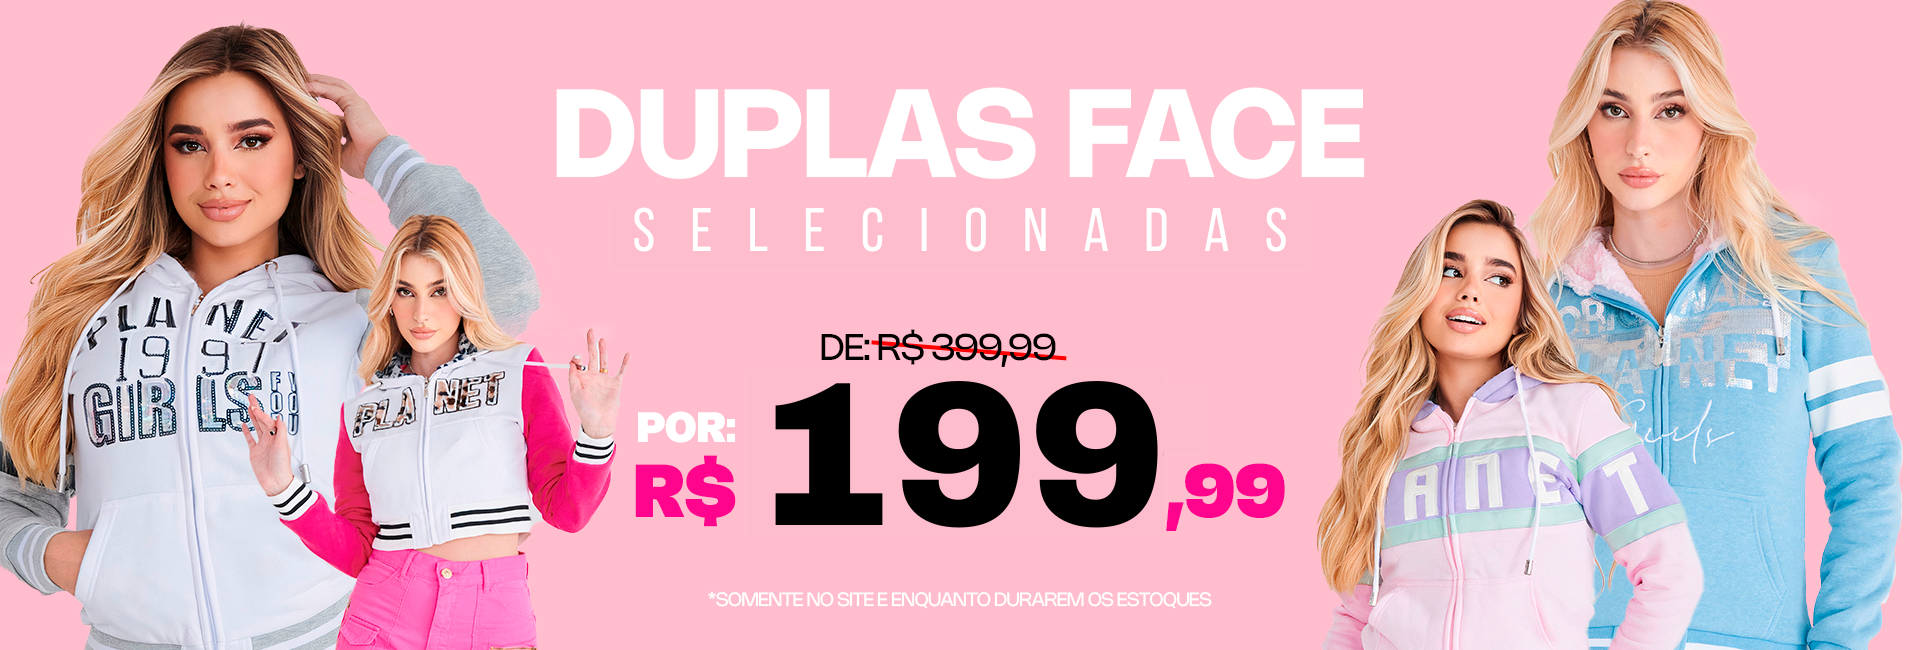 Dupla Face R$ 199,99 | Desktop - 1920x650